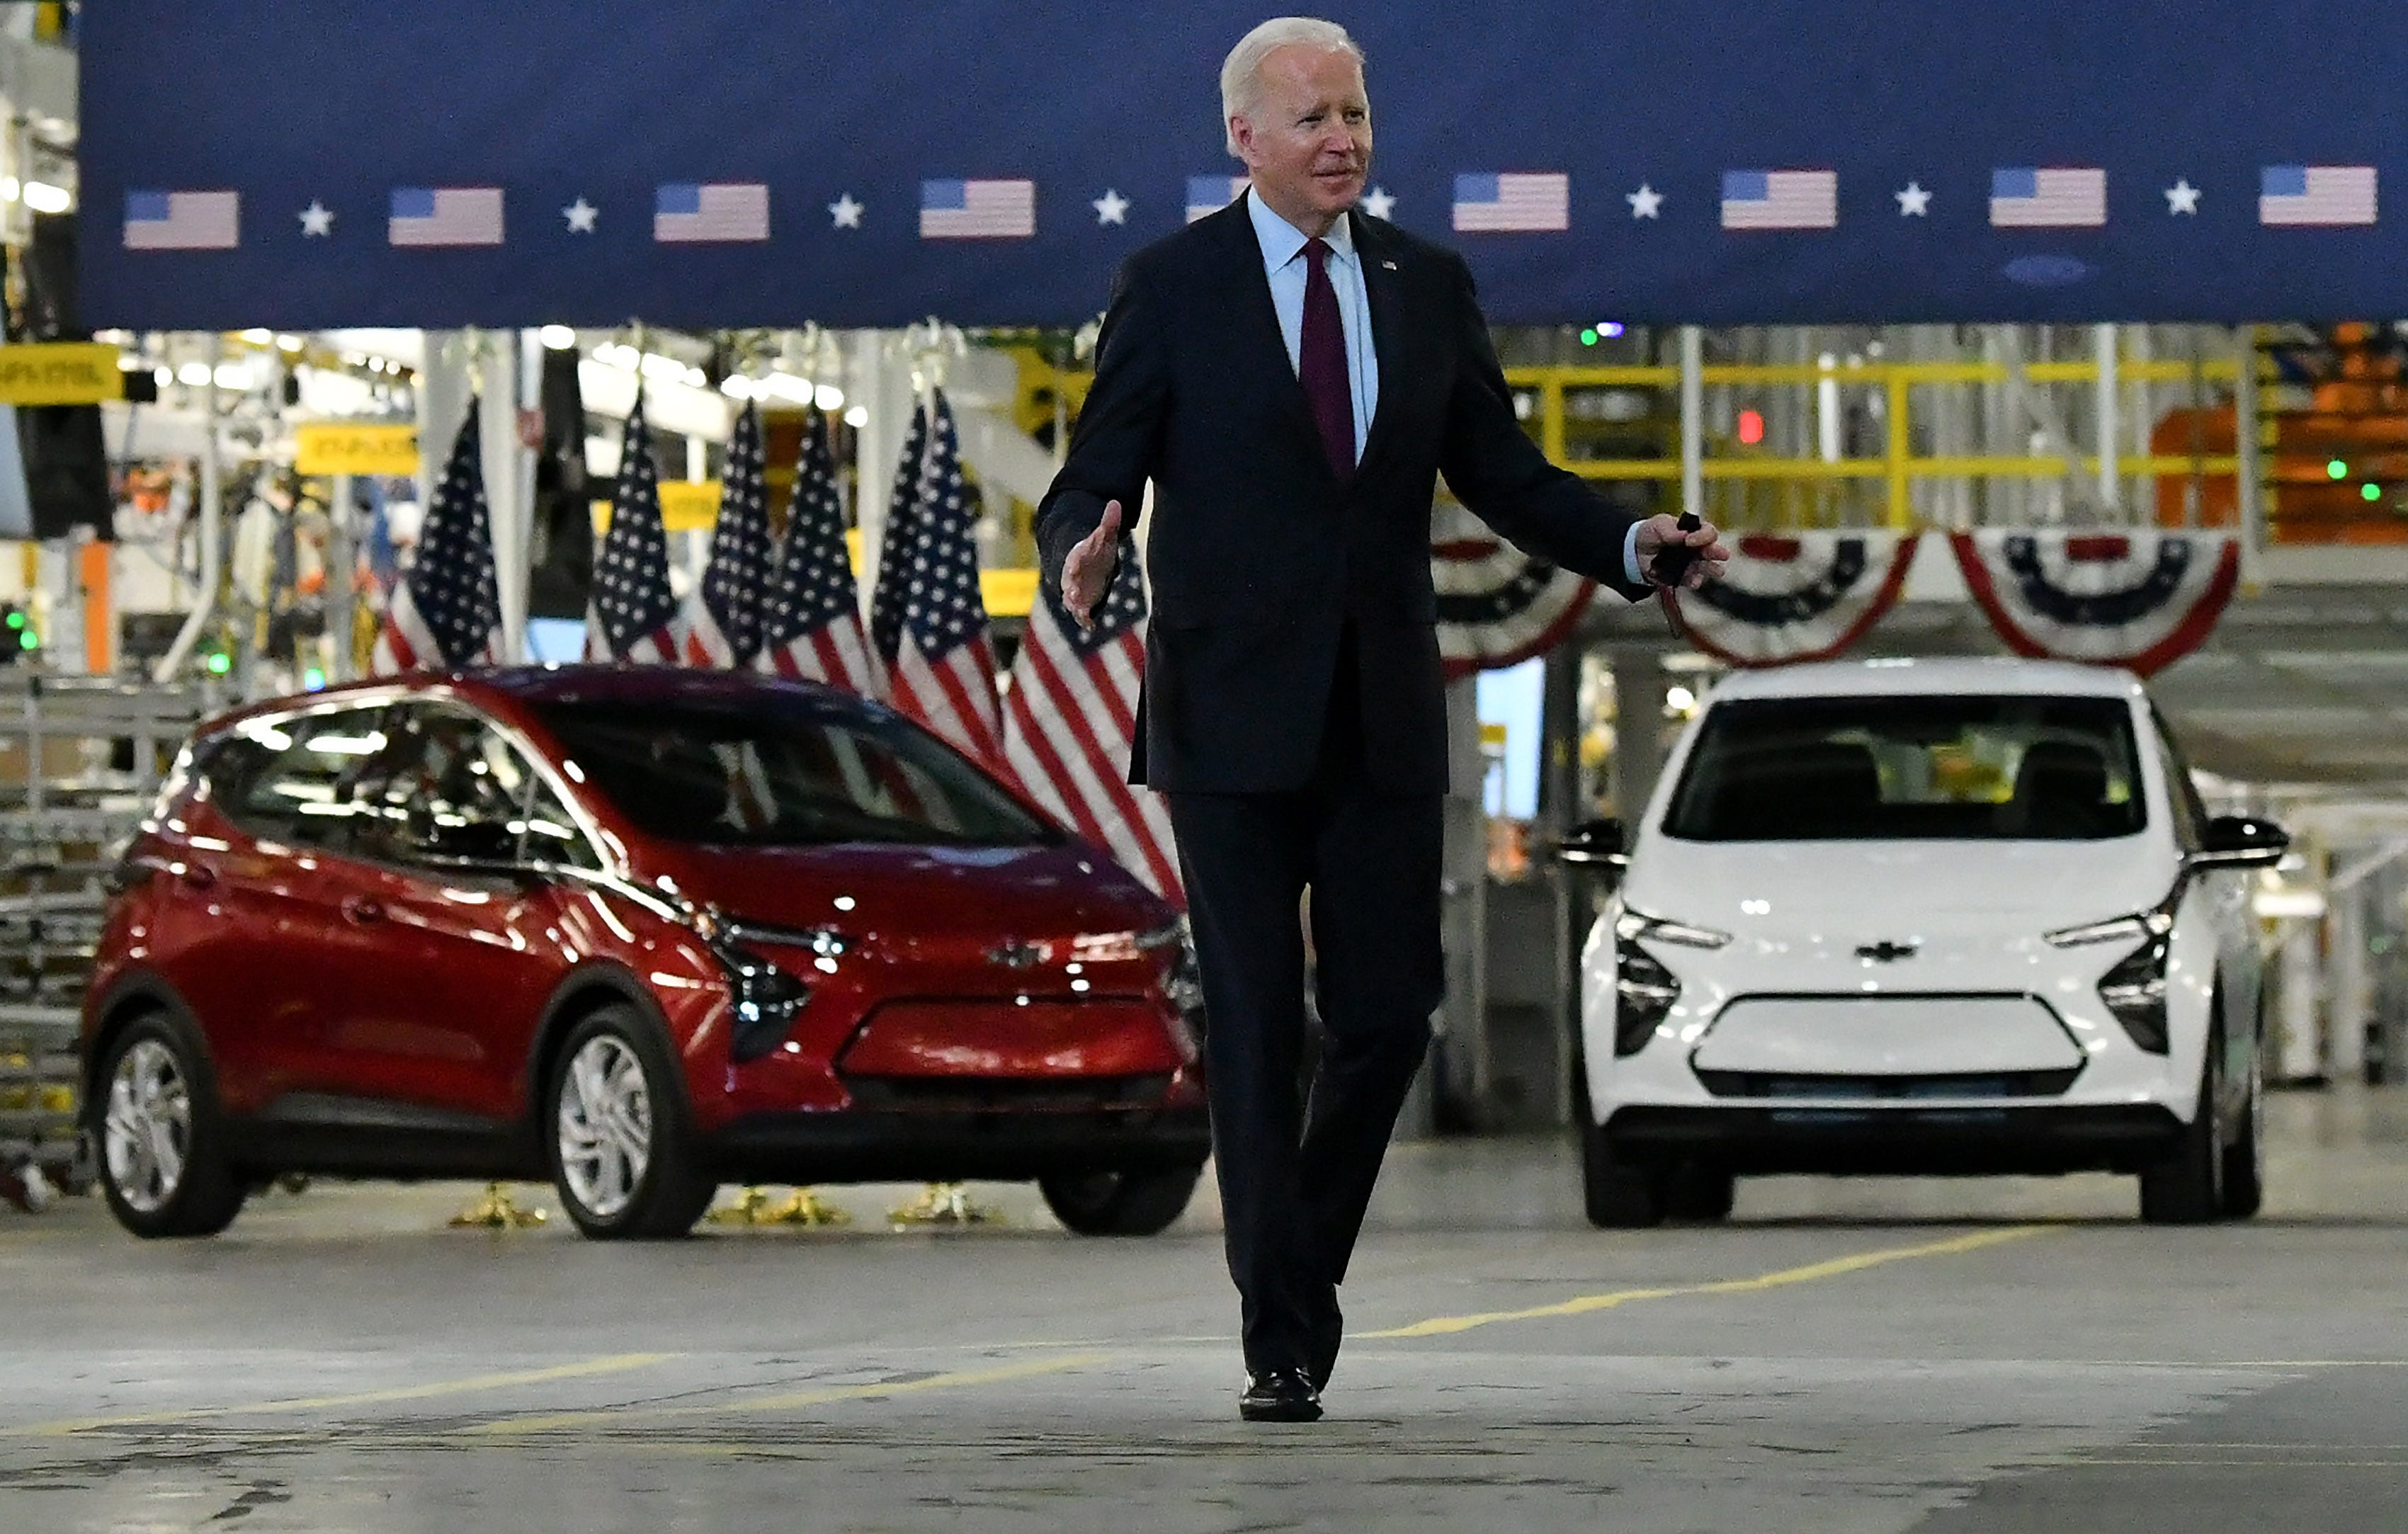 With GM Bolts in the background, President Joe Biden walks towards the podium to speak.